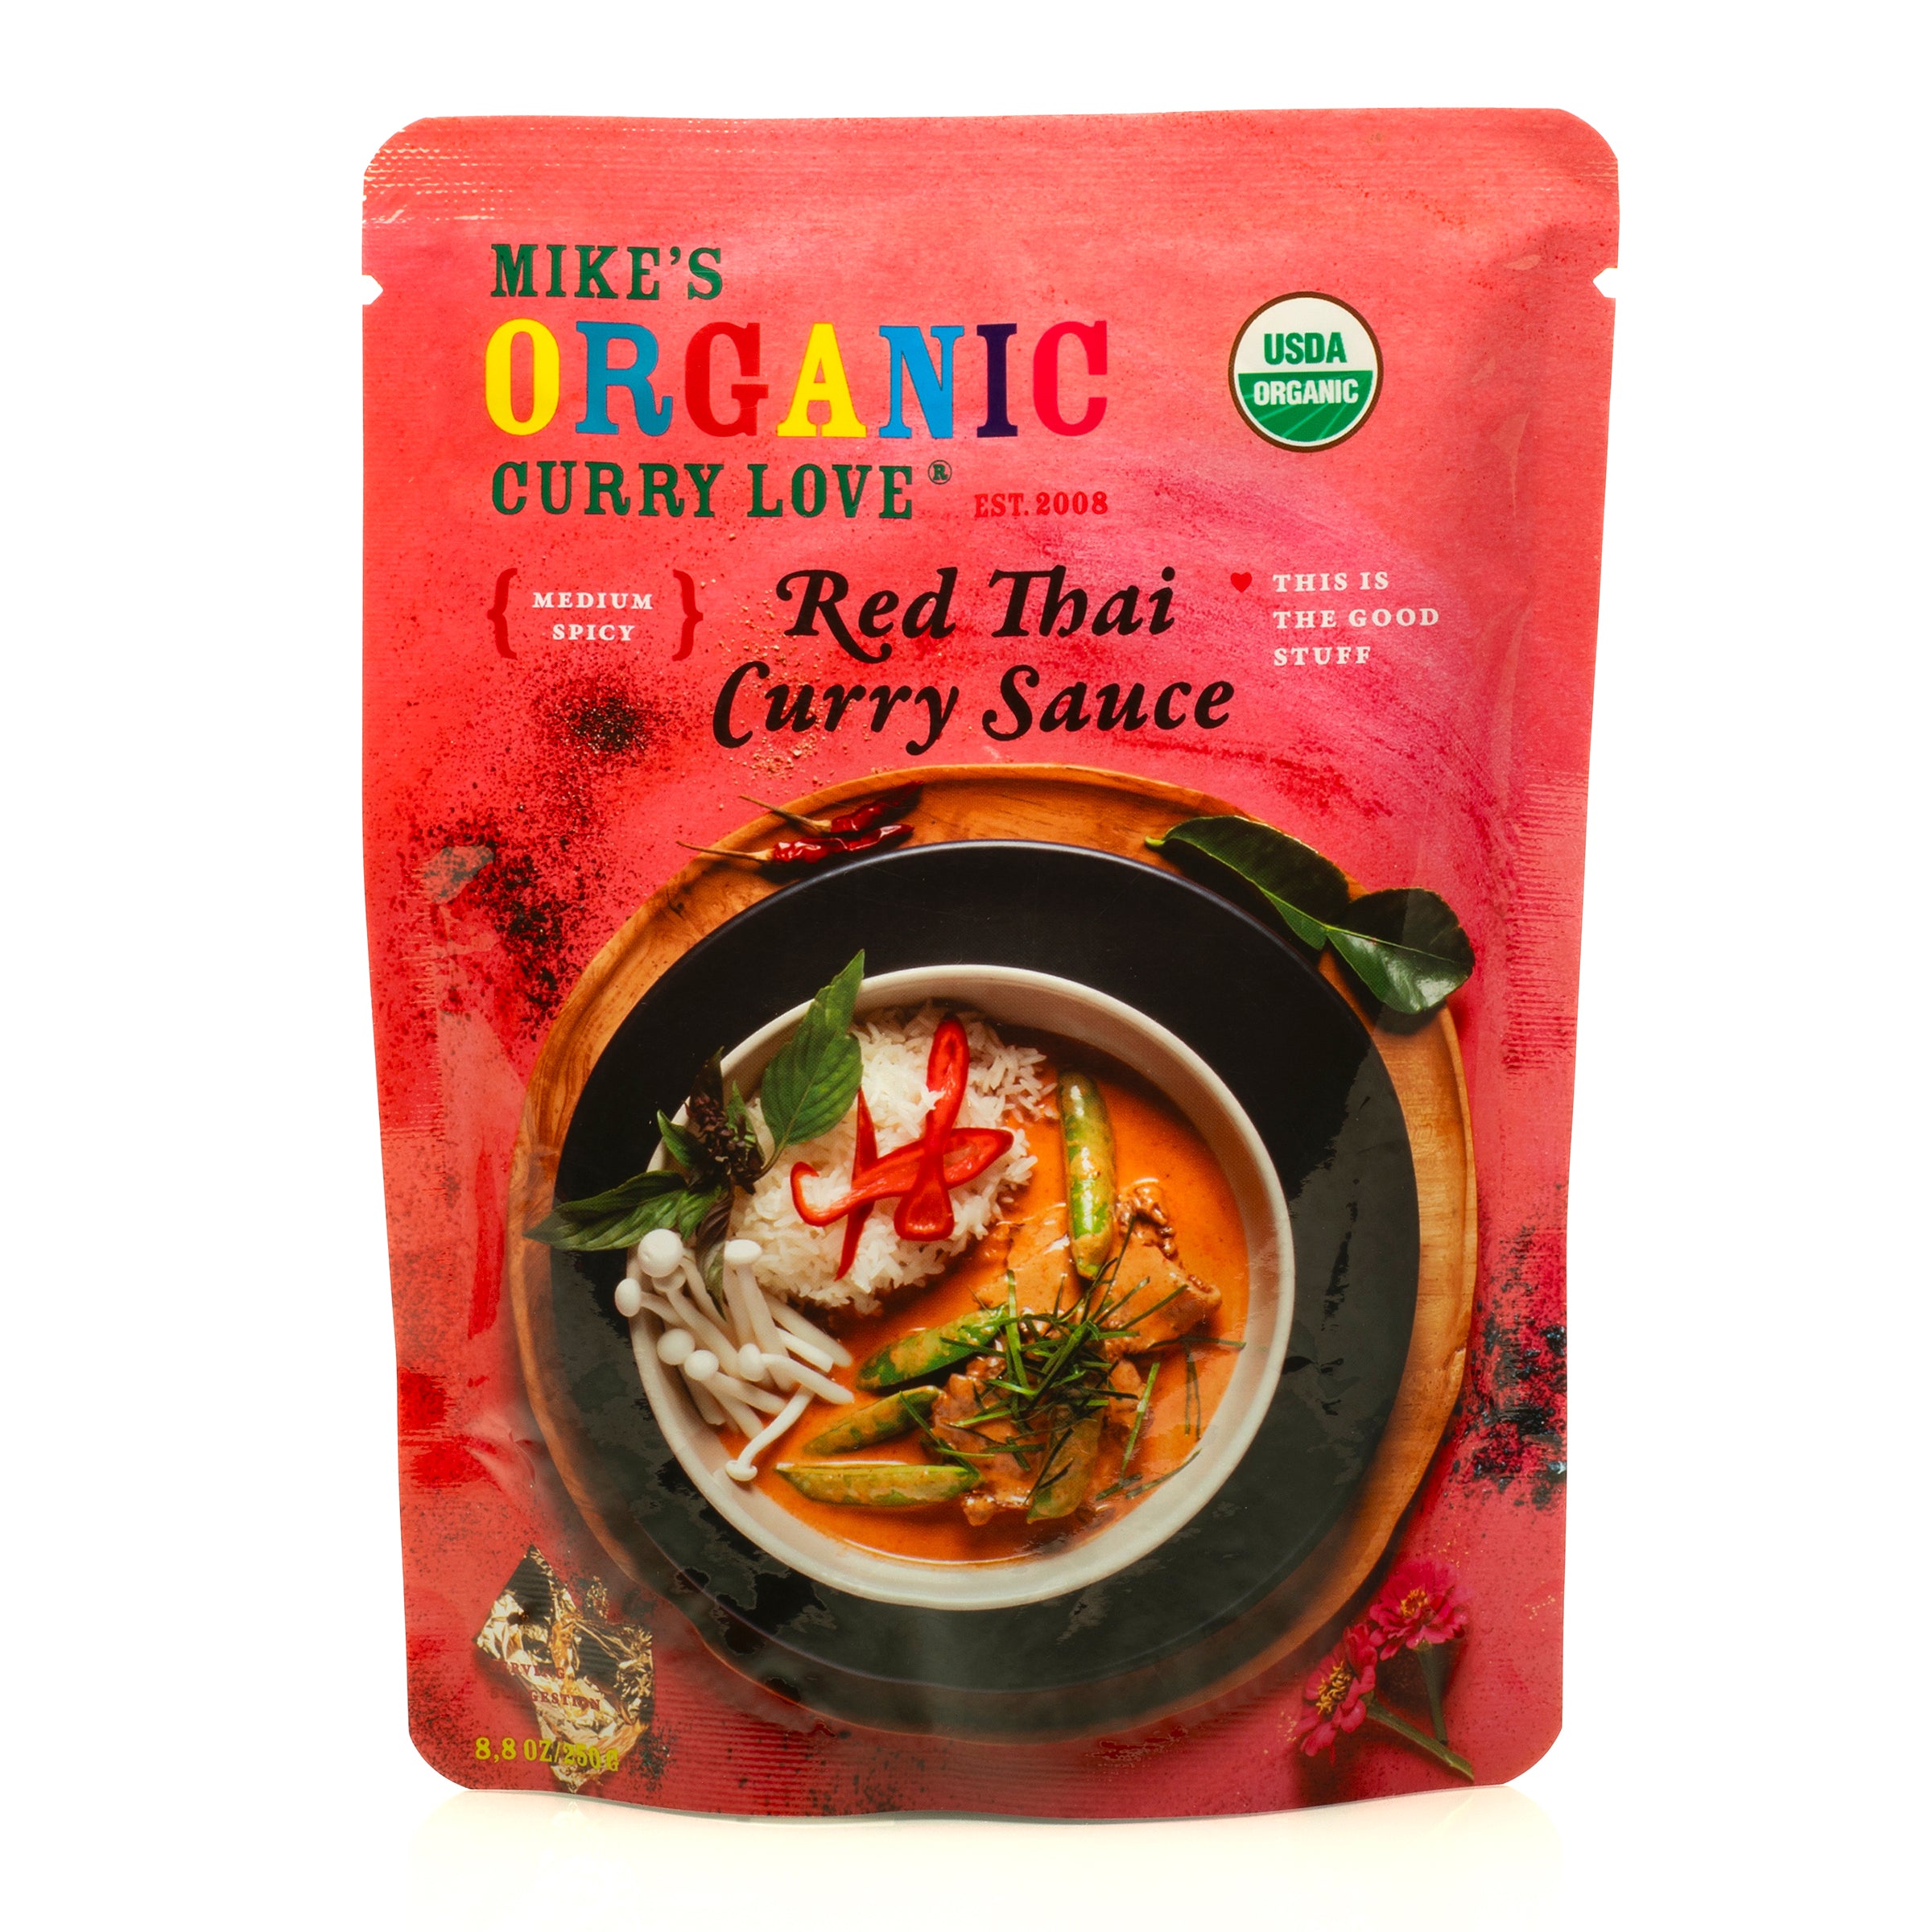 Red Thai Curry Sauce - 1 x 8.8 oz pouch